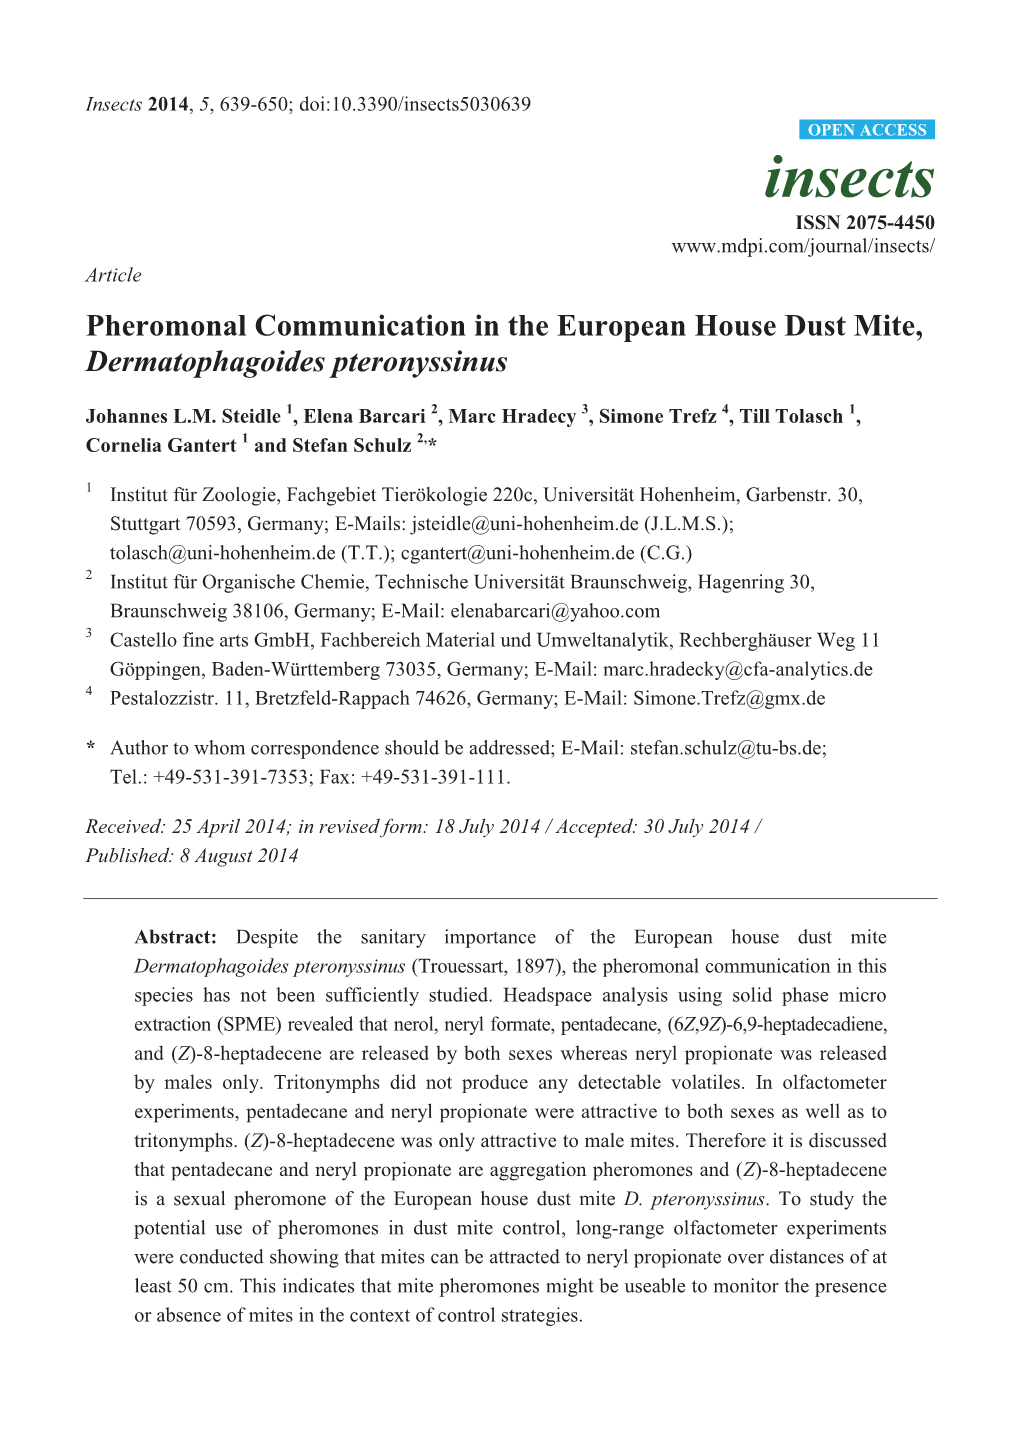 Pheromonal Communication in the European House Dust Mite, Dermatophagoides Pteronyssinus